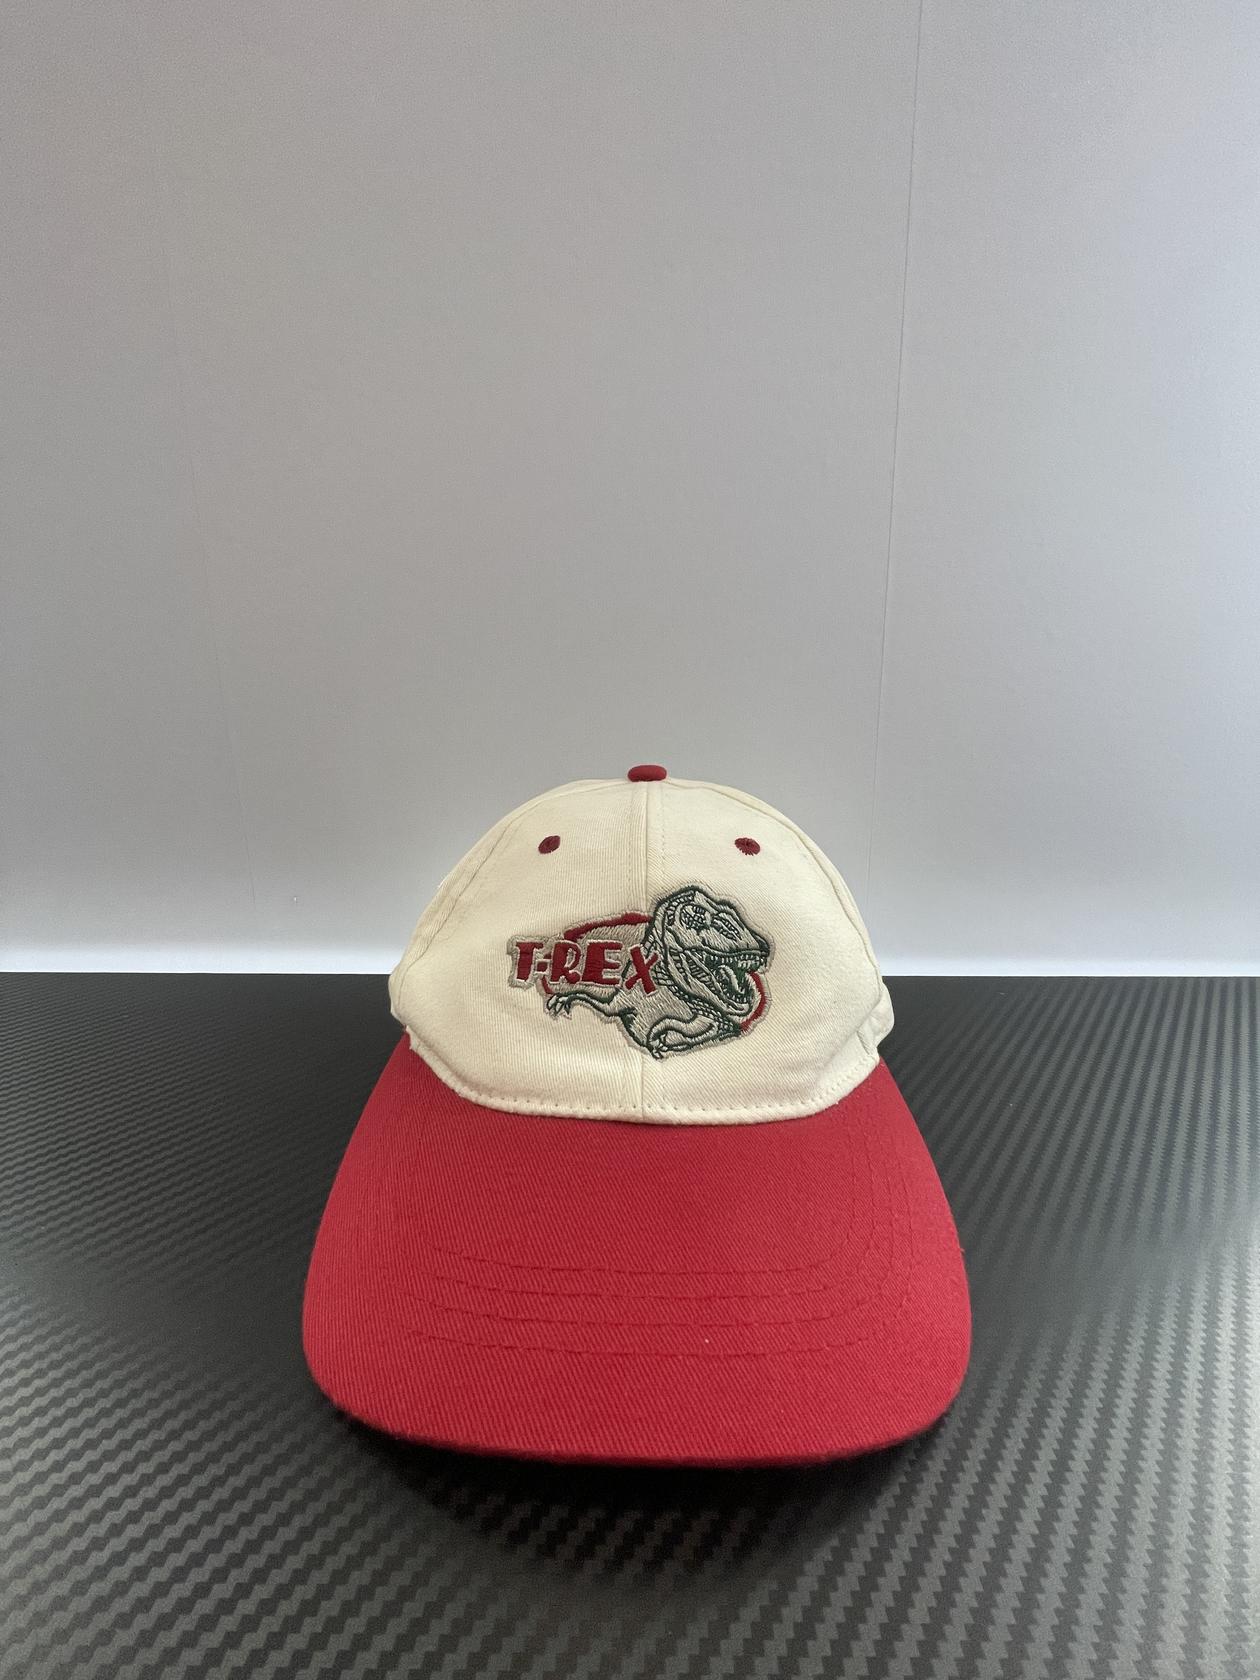 Vintage T-Rex Universal Studios Parks Cap Hat - Red Bill / White - Very Good